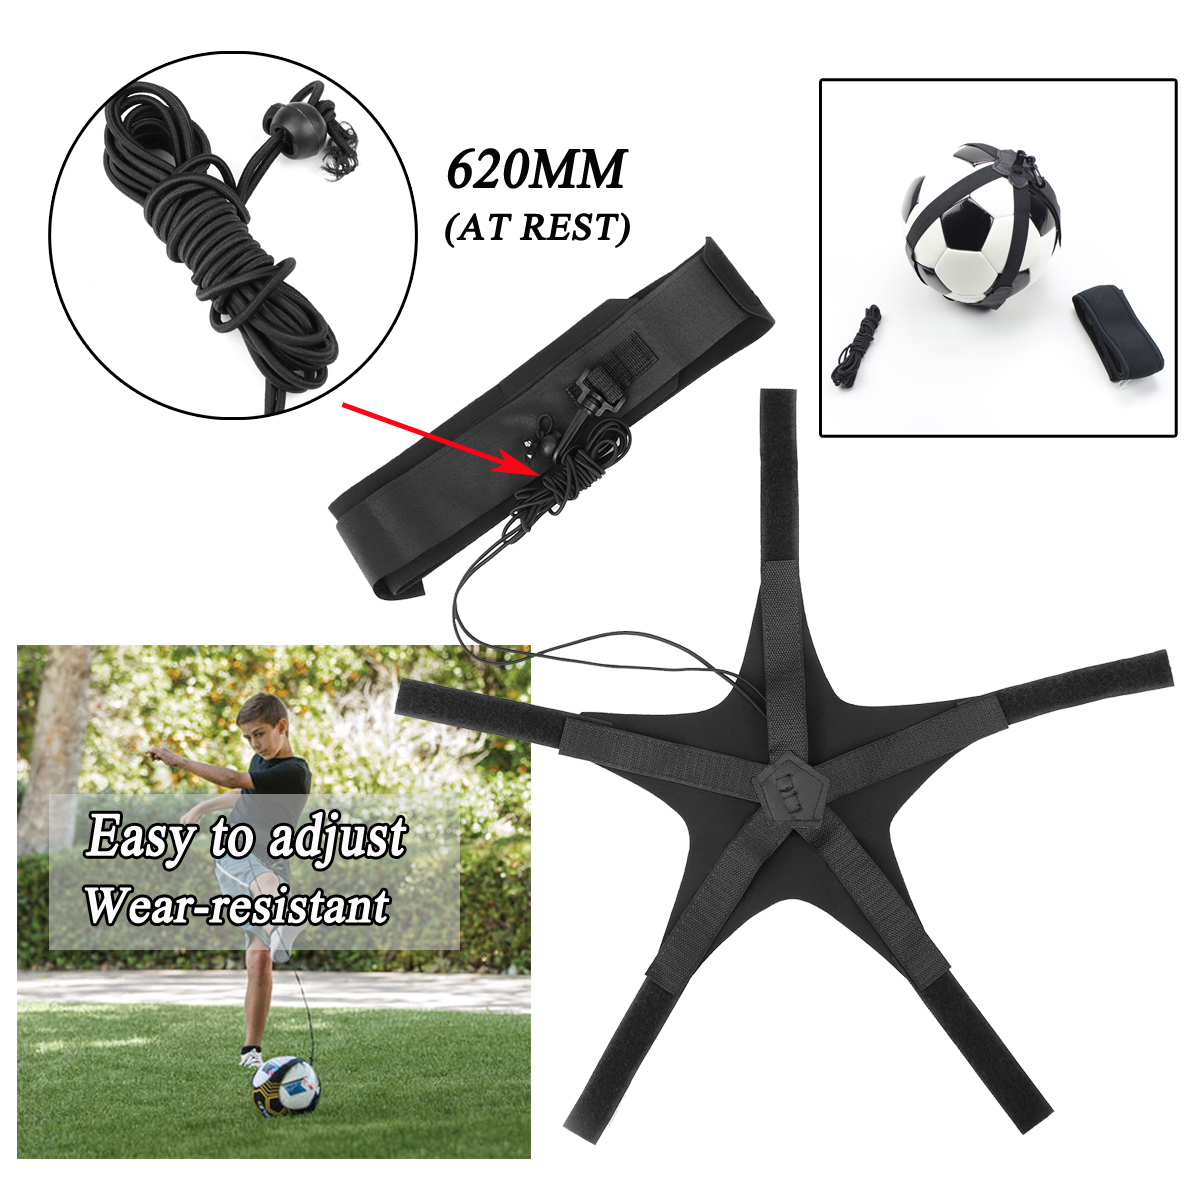 Football-Kick-Trainer-Skill-Soccer-Training-Equipment-Adjustable-Waist-Belt-1308656